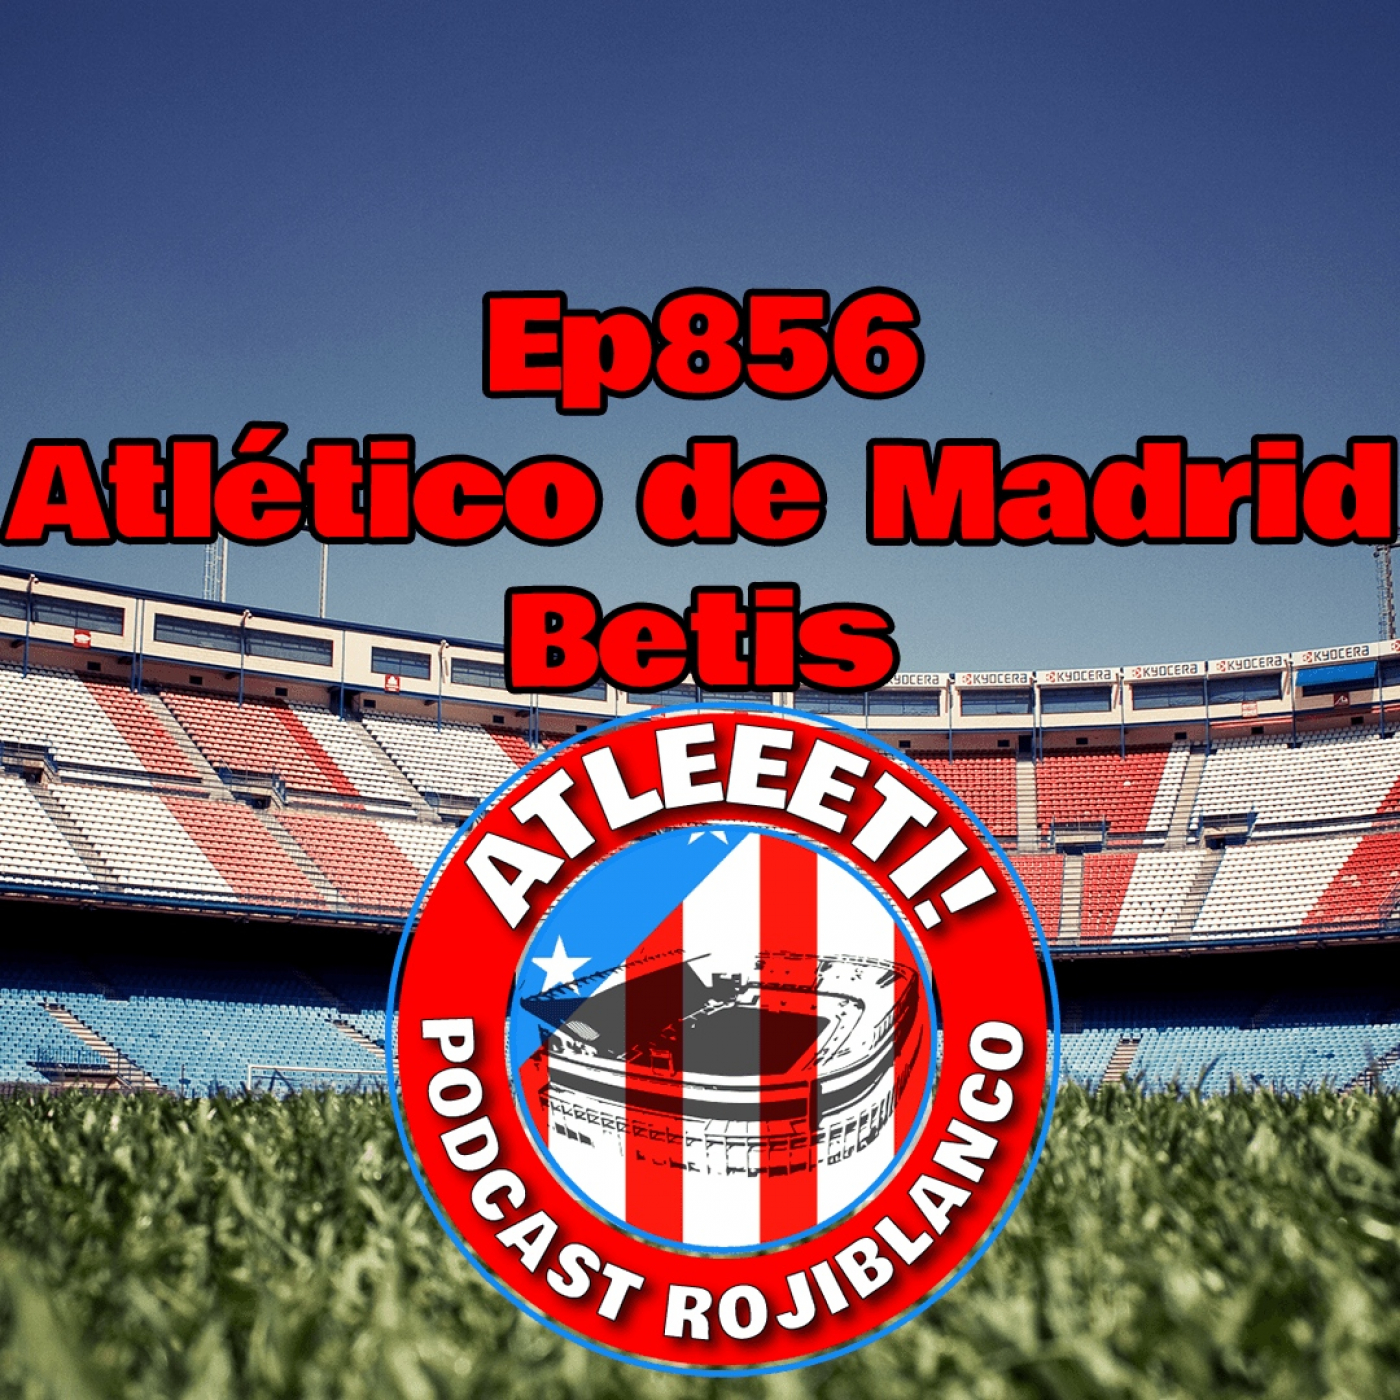 Ep856: Atlético de Madrid 1-0 Betis